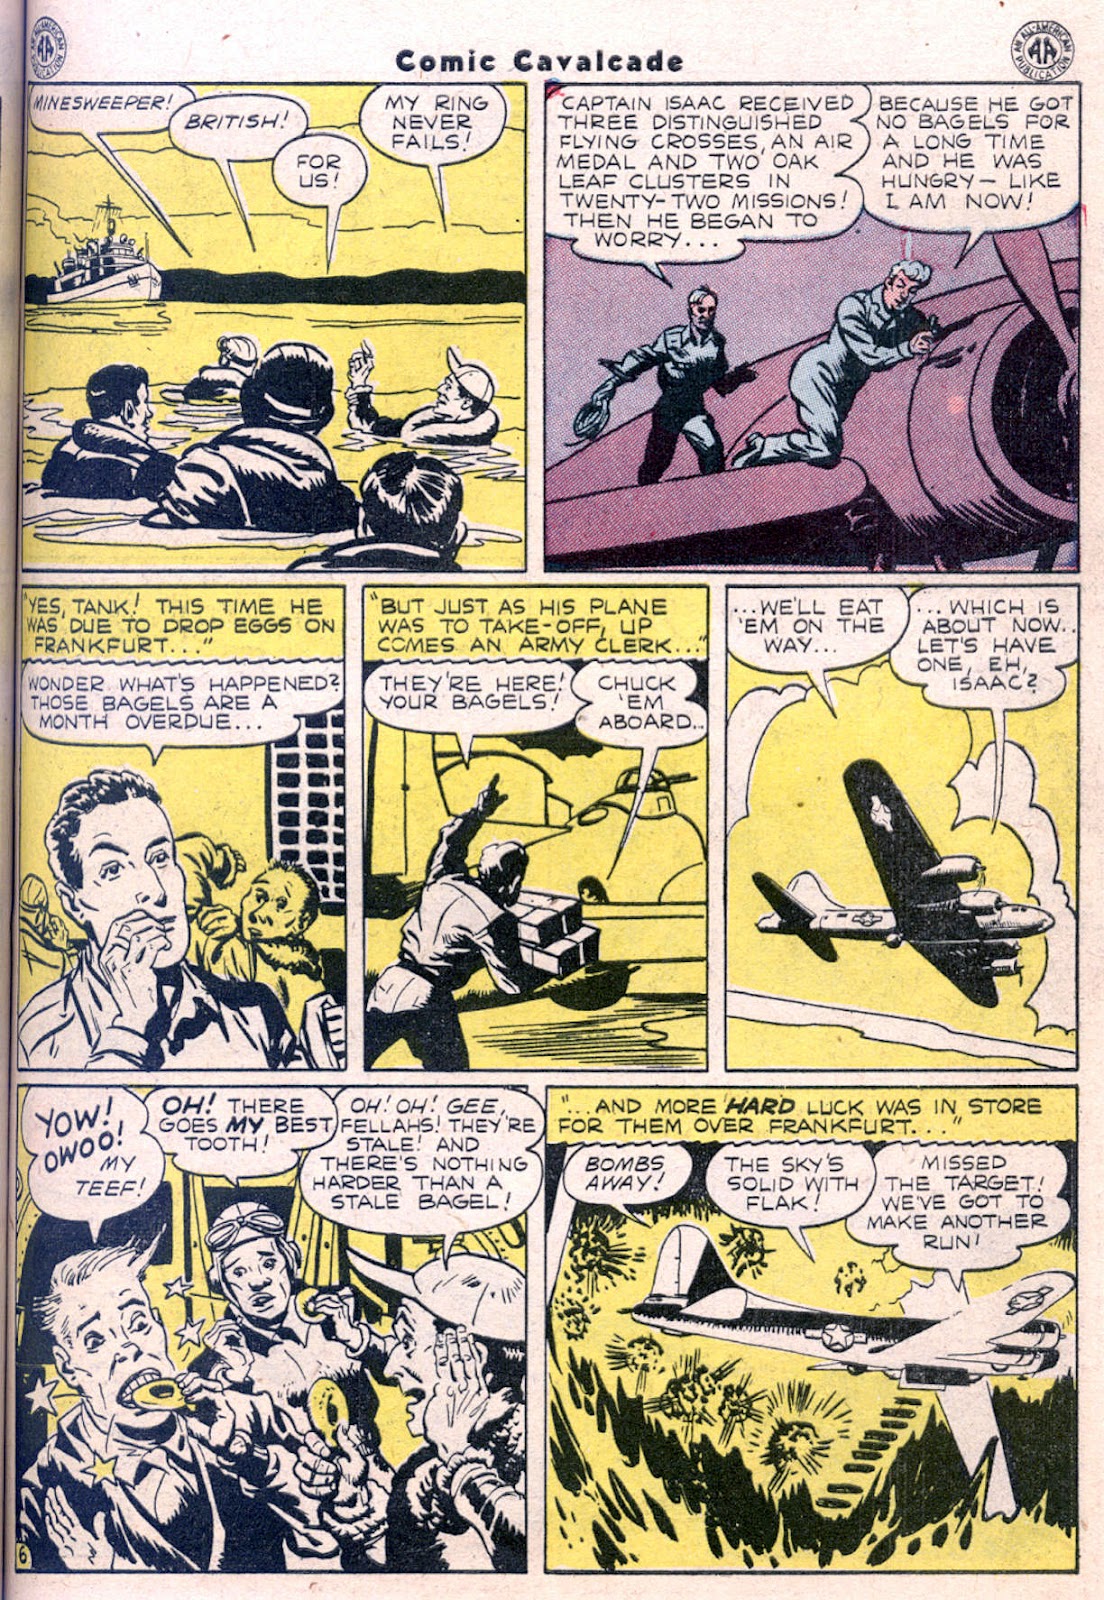 Comic Cavalcade issue 11 - Page 39